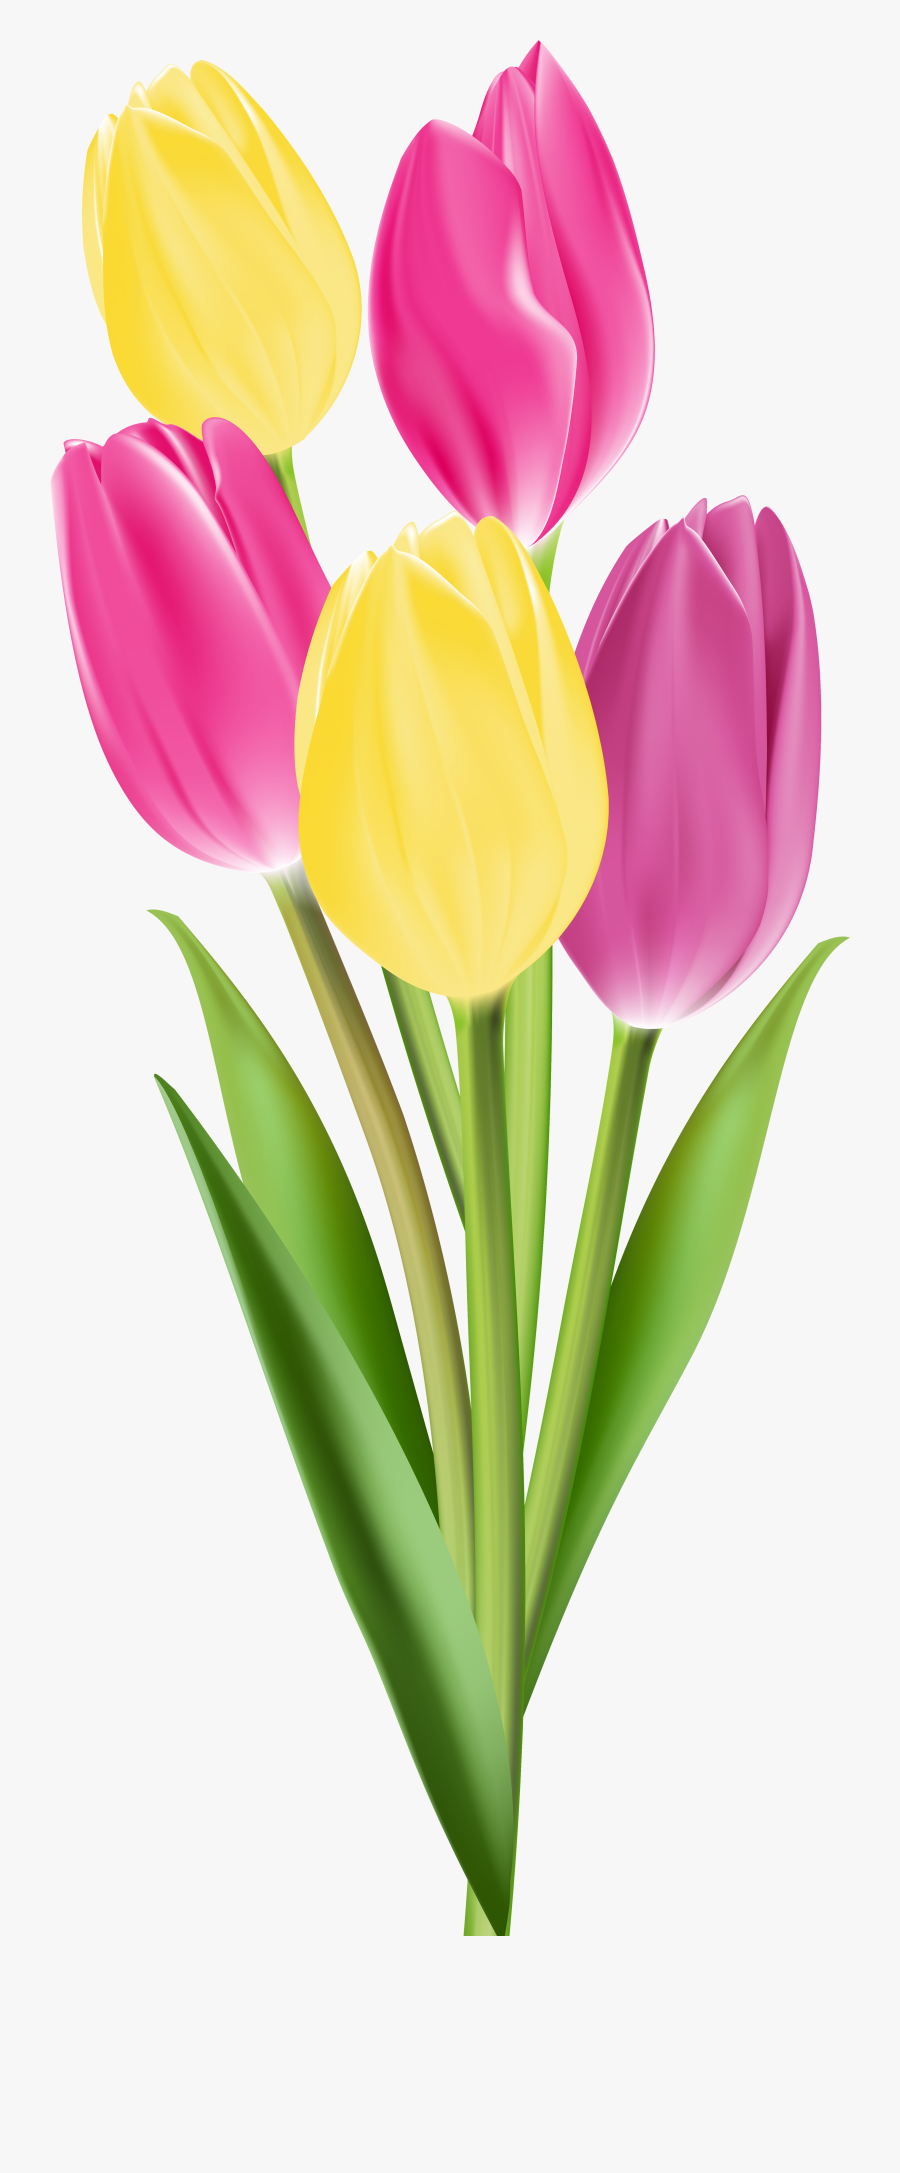 Tulip Flower Hd Png, Transparent Clipart